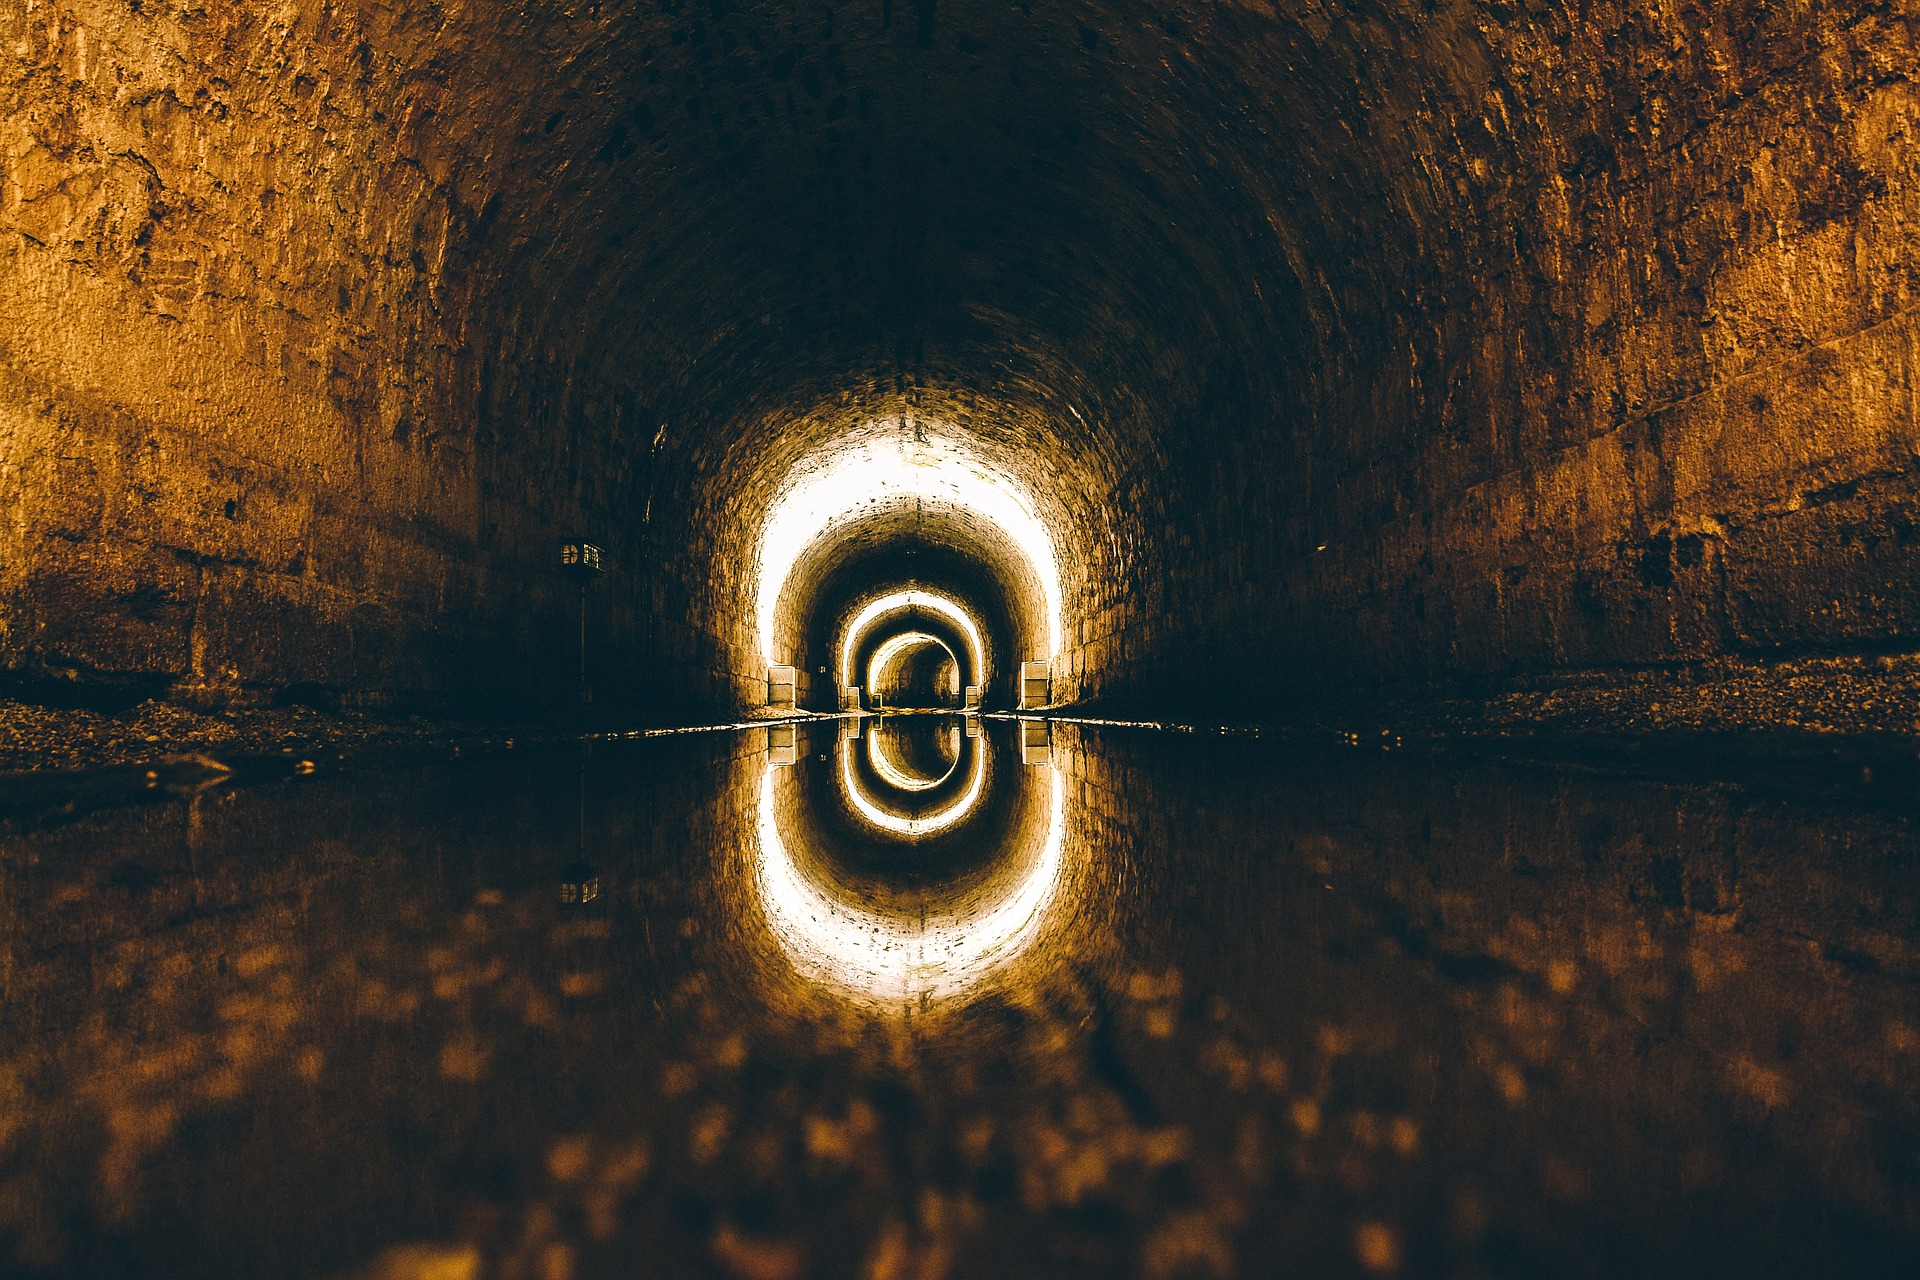 Old Dutch tunnel found in Indonesia’s Klaten district